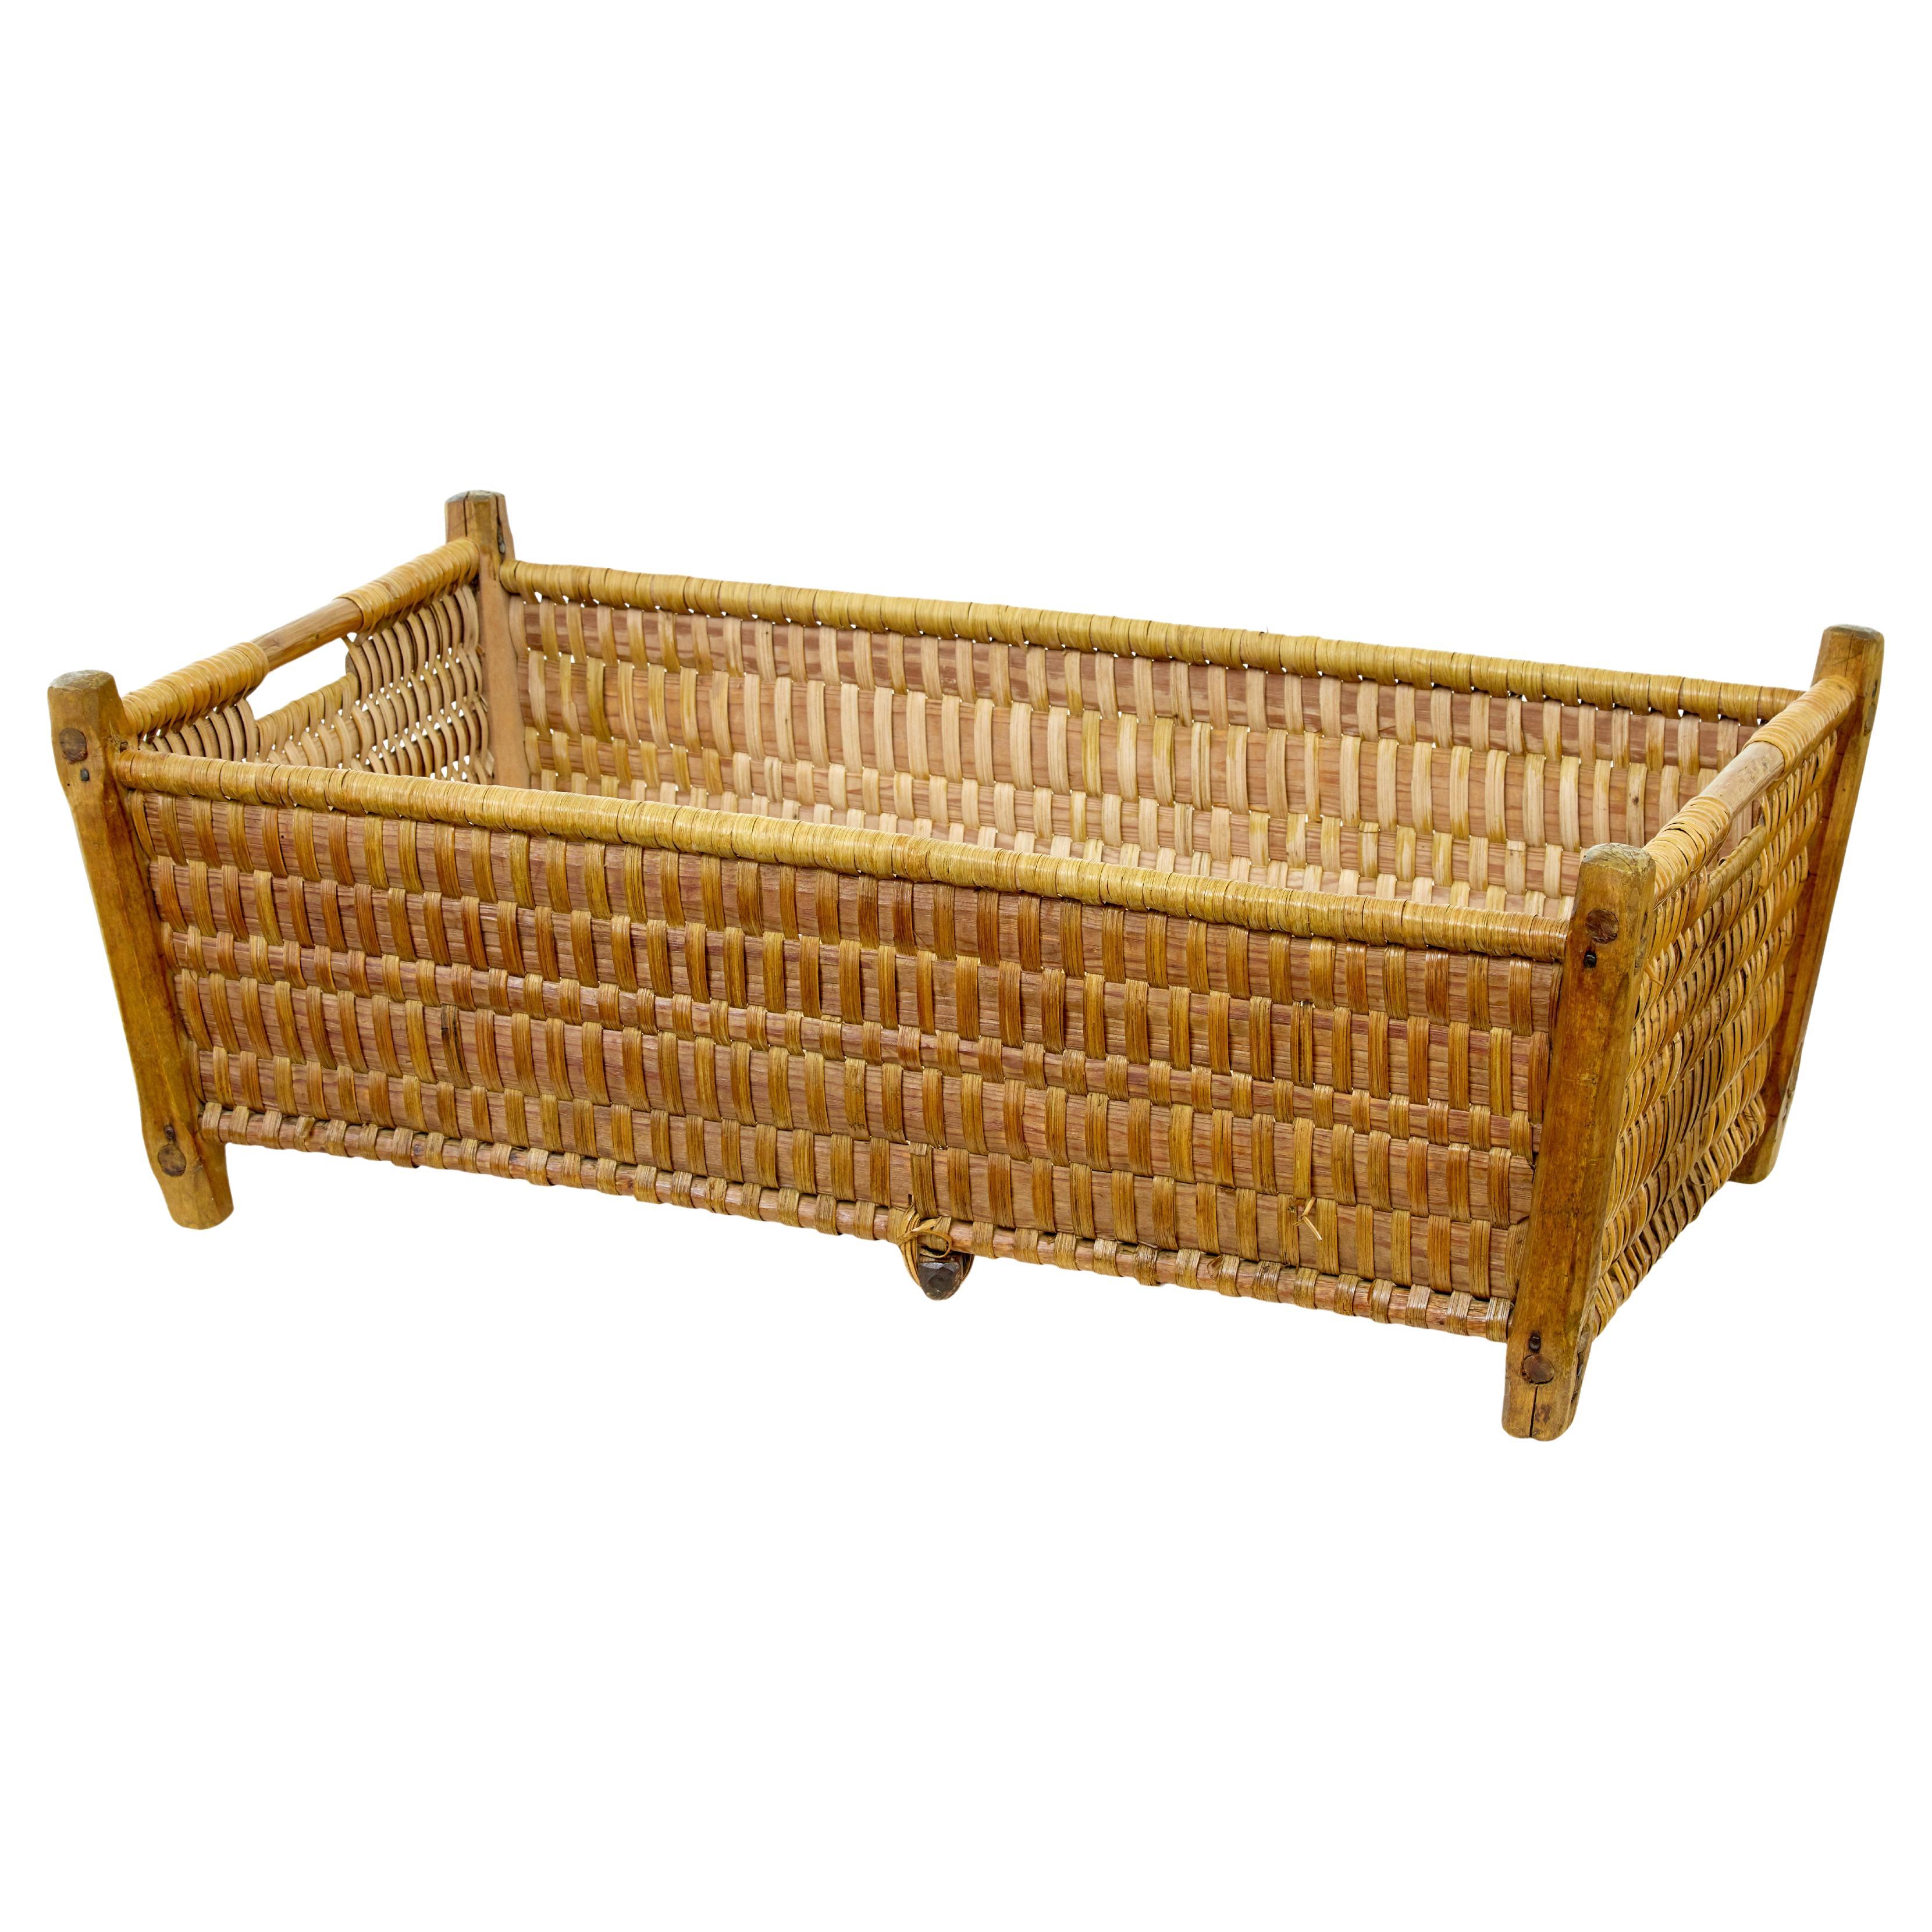 19th century Scandinavian woven pine basket